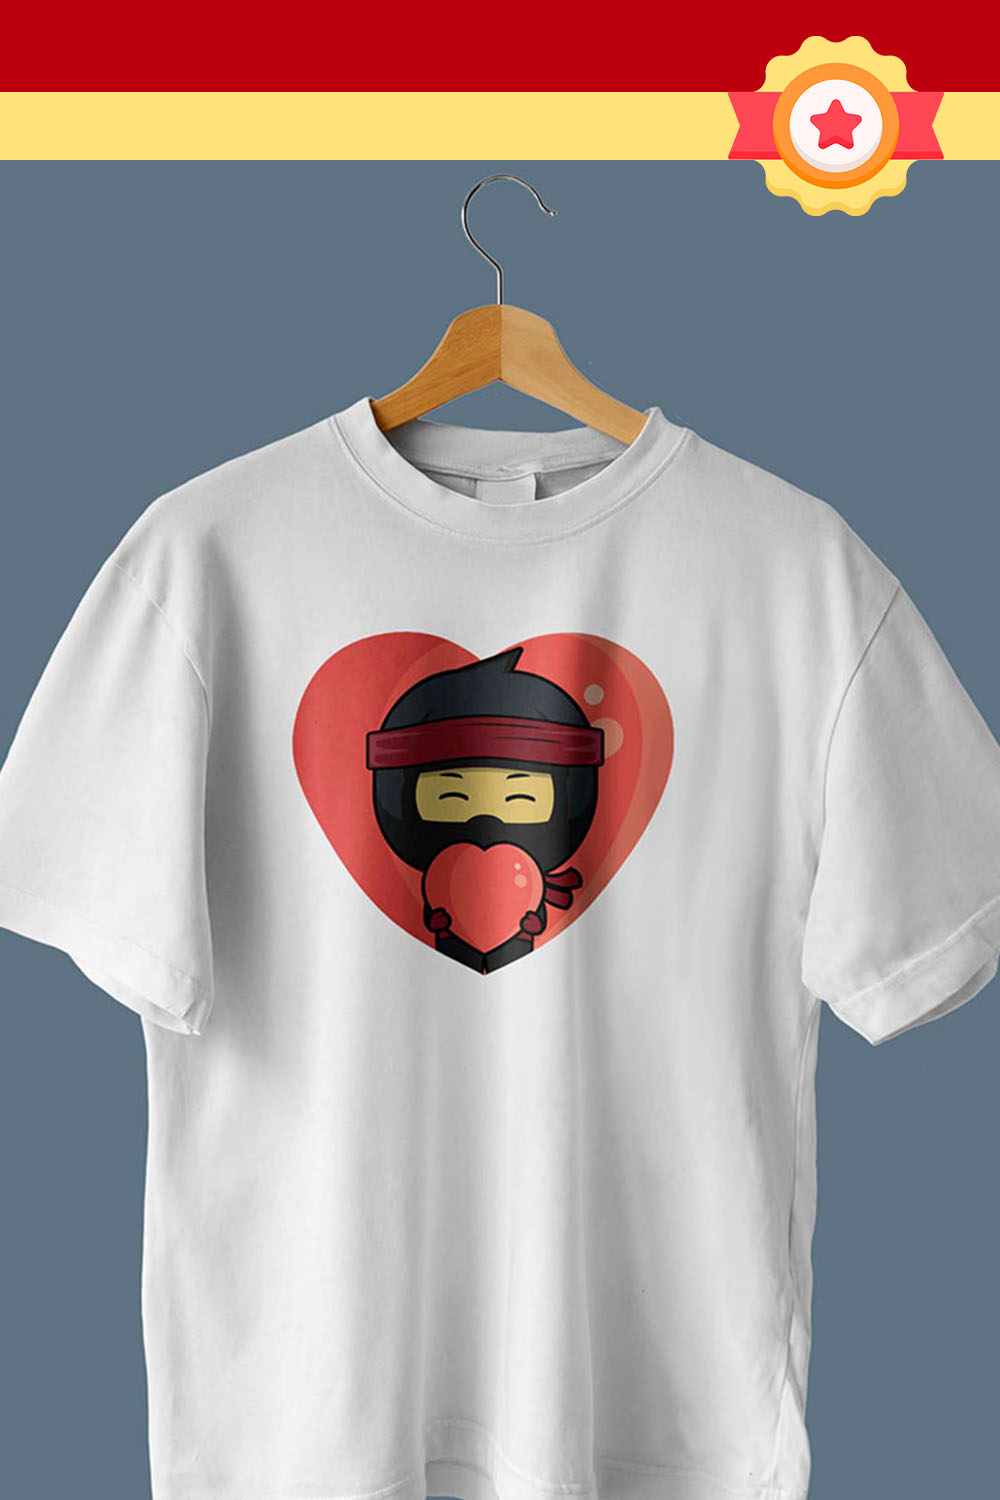 Ninja Giving Love T-Shirt Design Pinterest collage image.